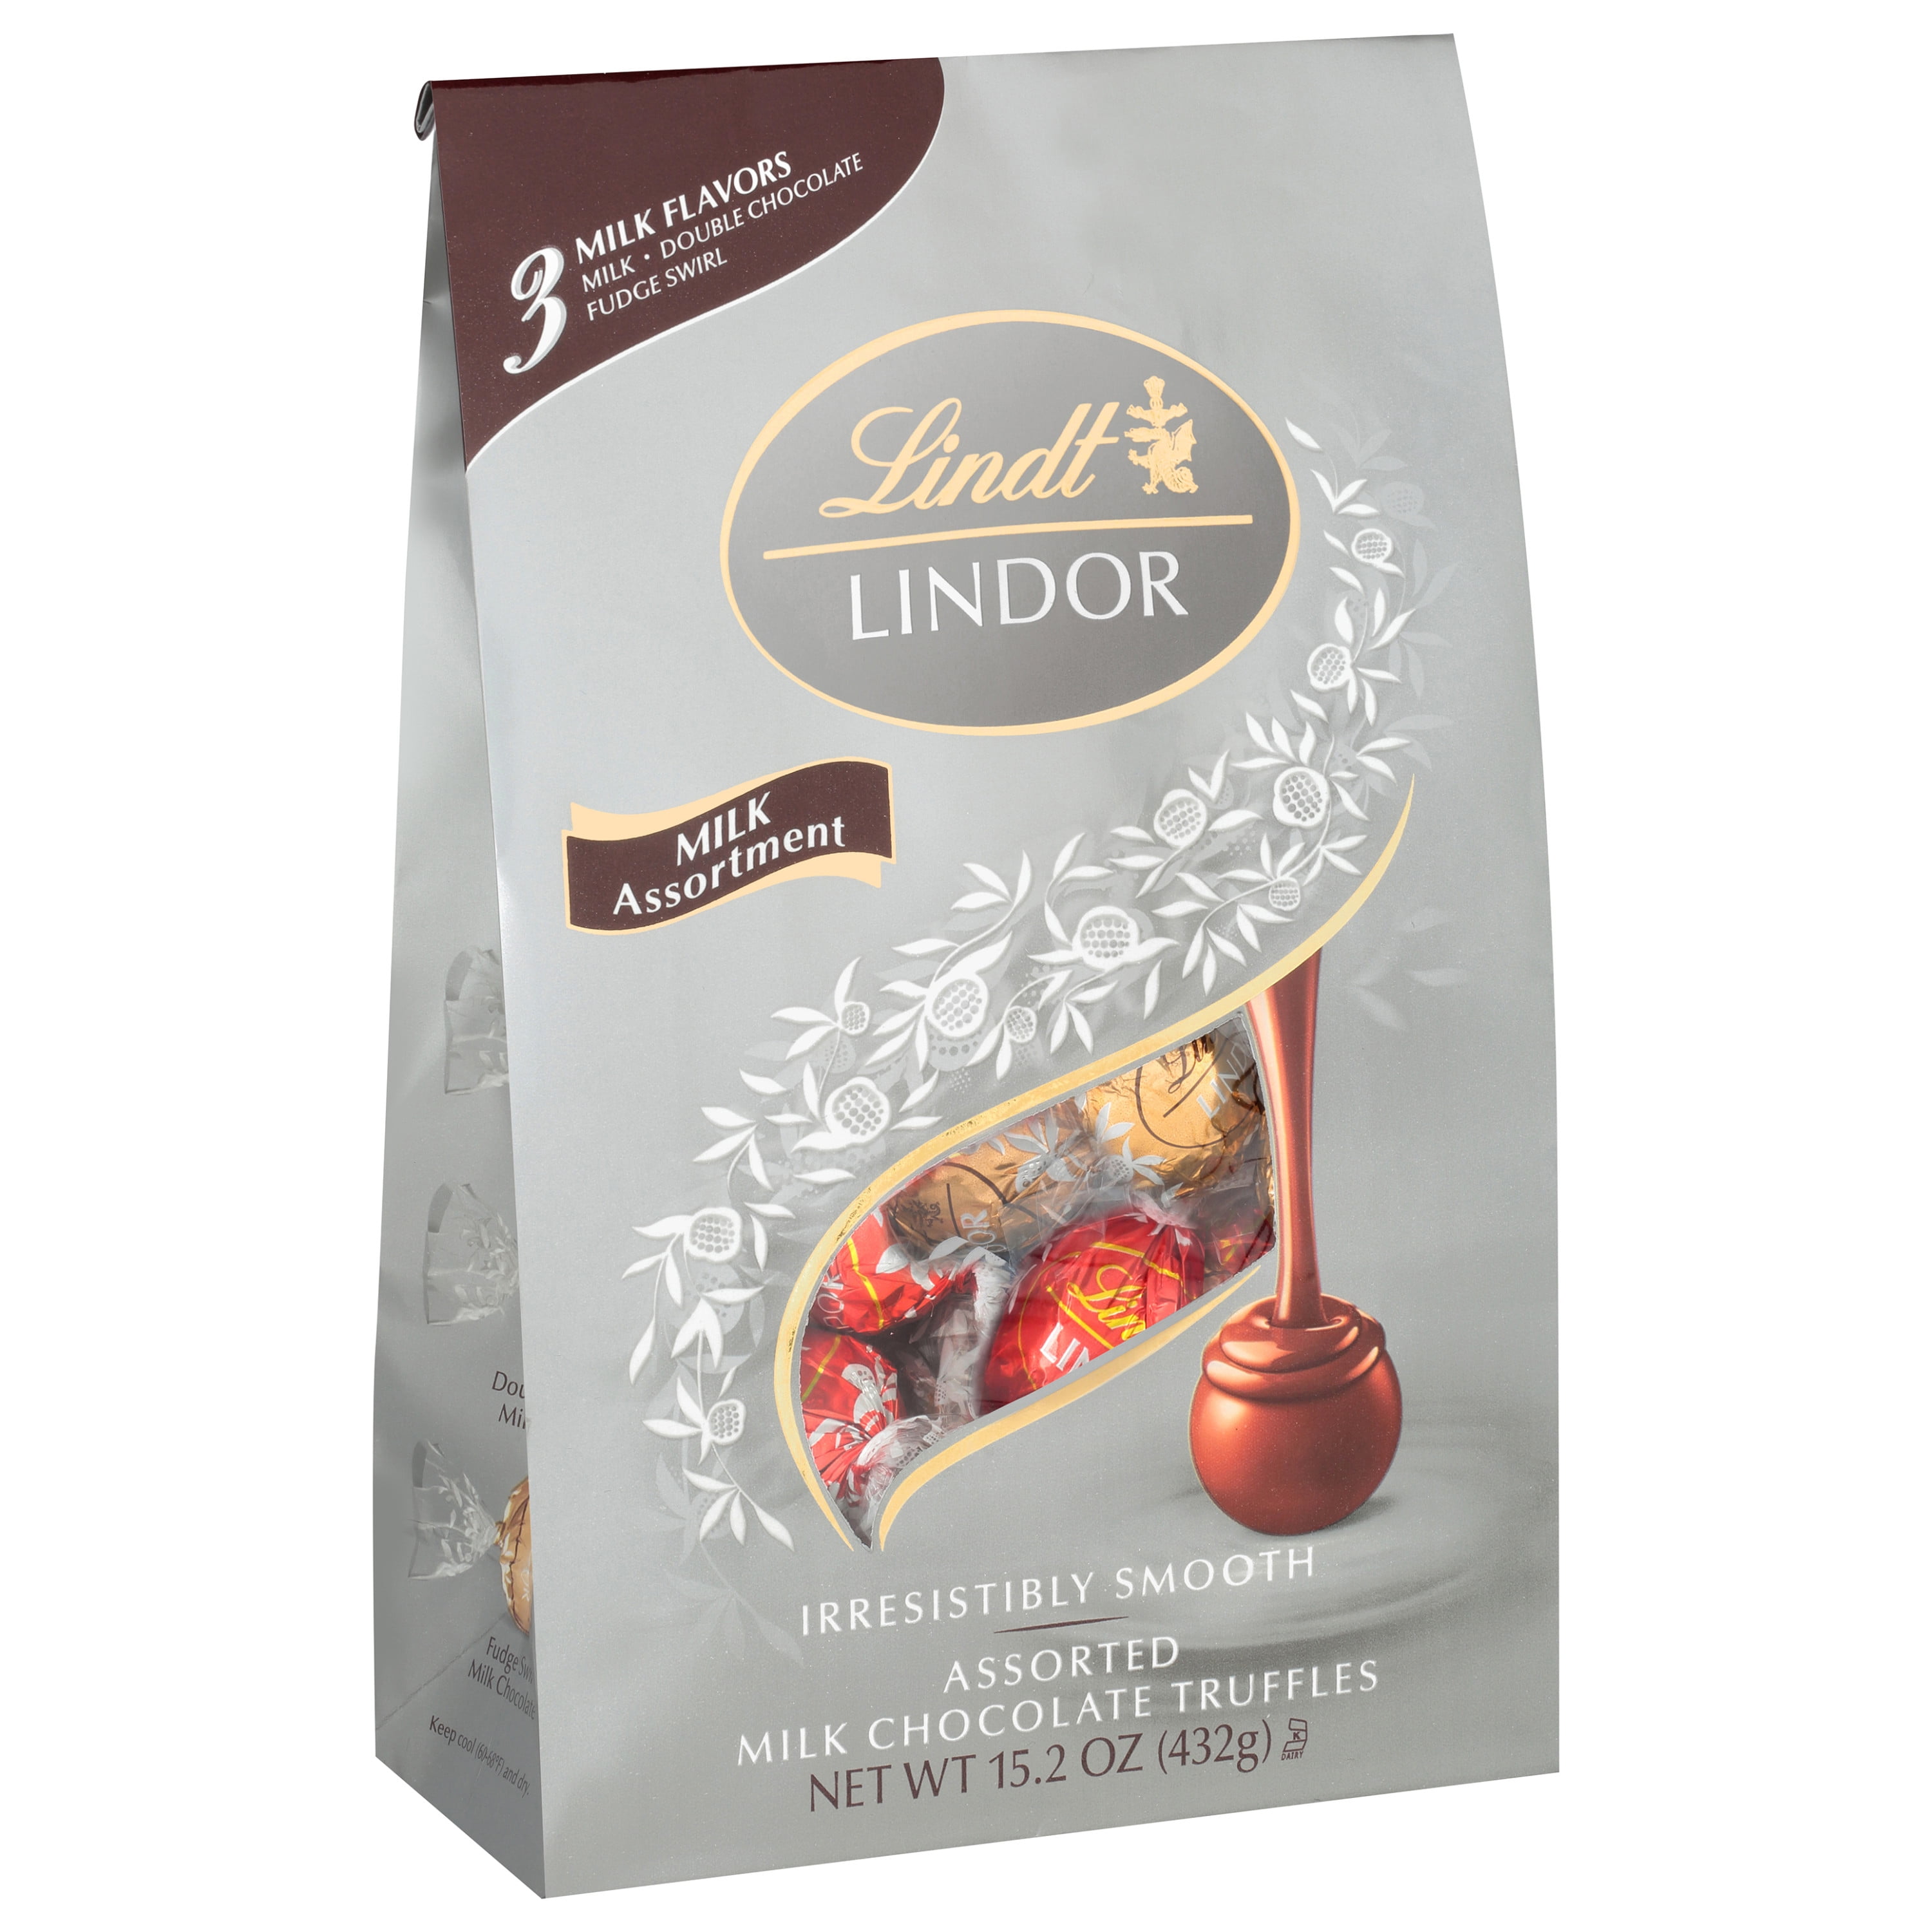 Lindt Lindor Milk Chocolate Truffle Assortment Bag 15.2 oz